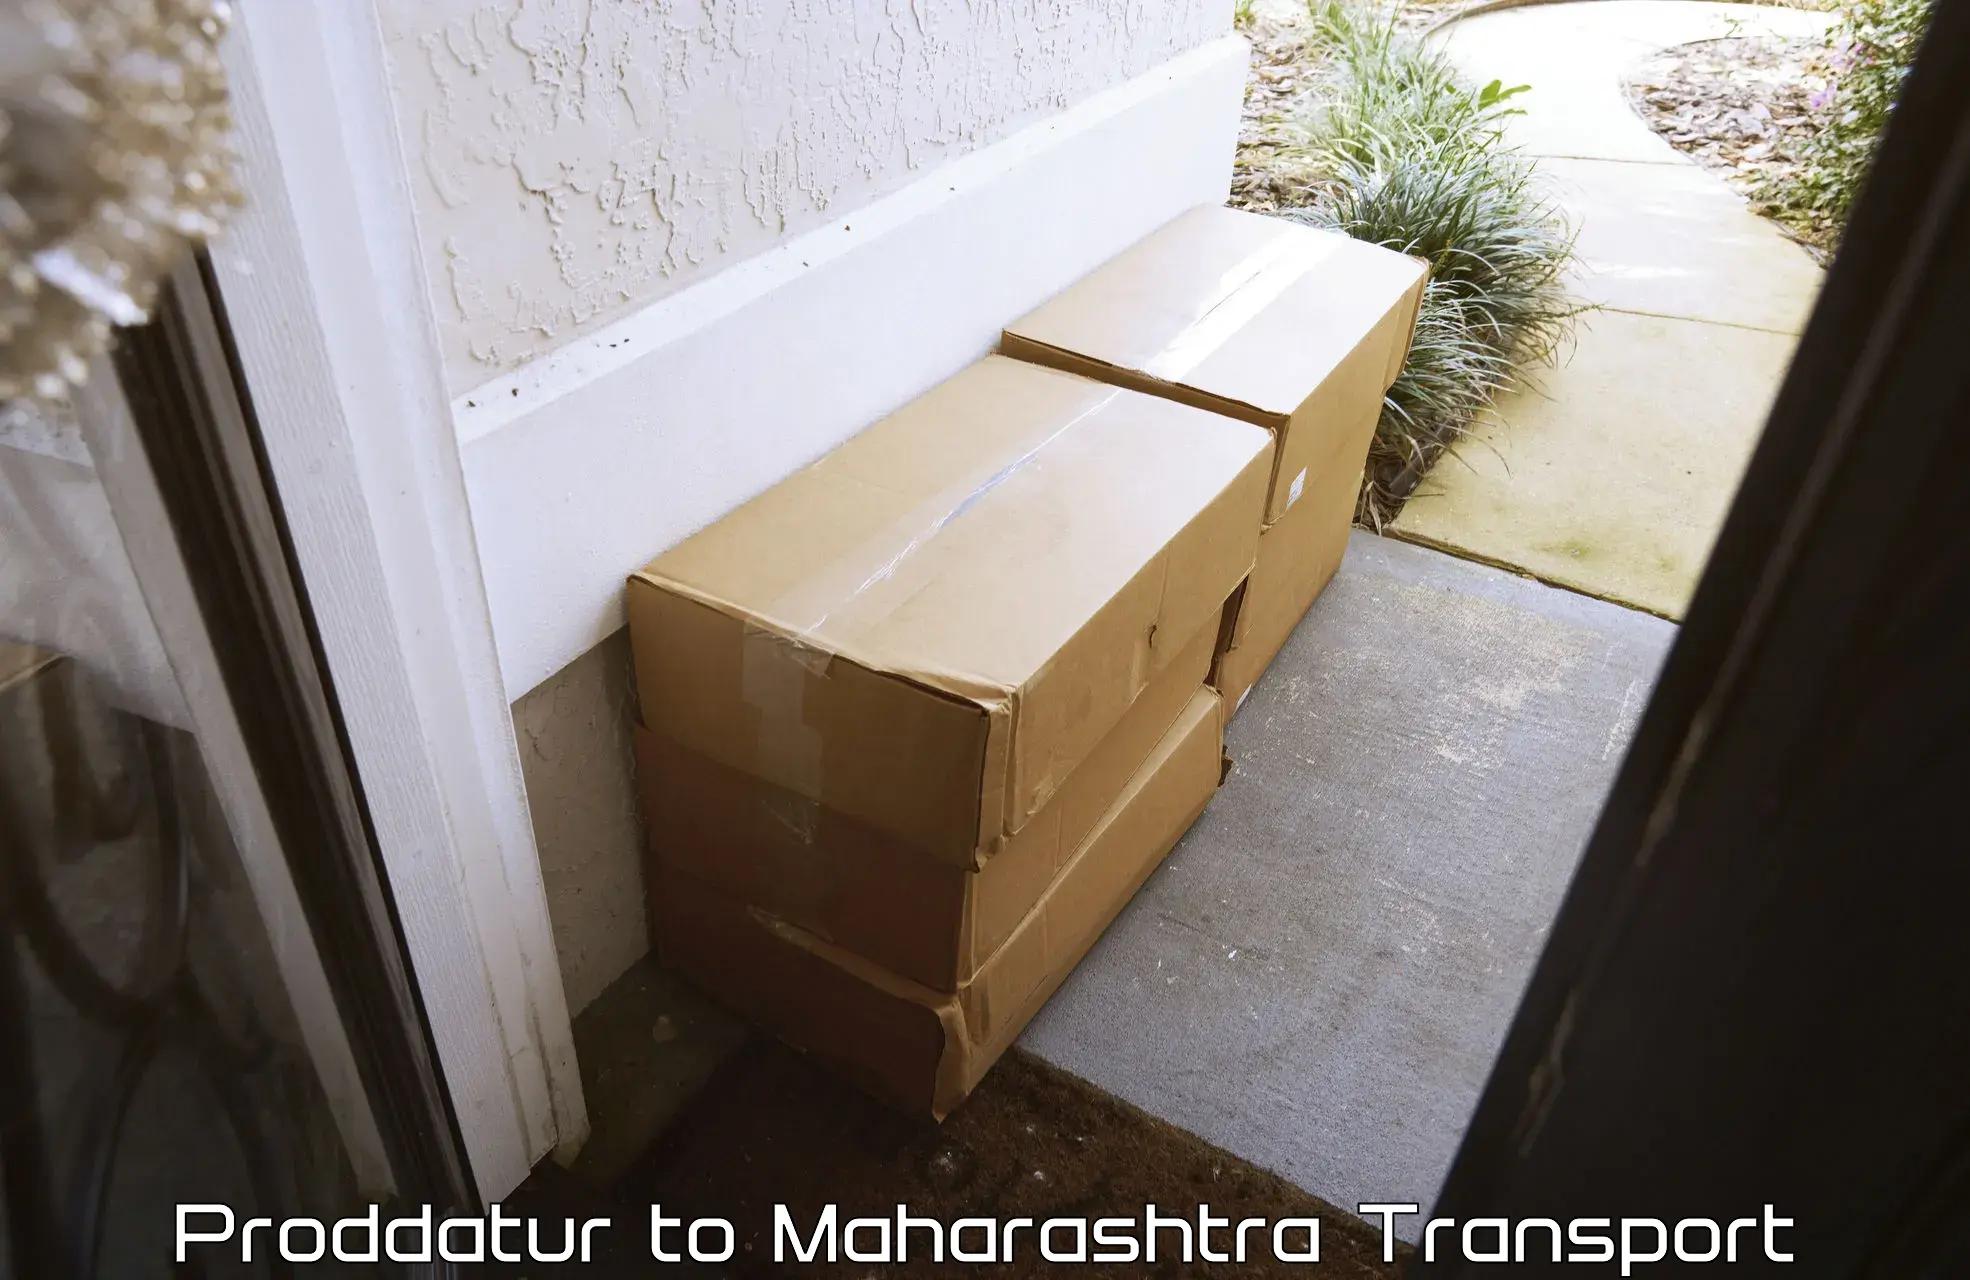 Bike shipping service Proddatur to Maharashtra